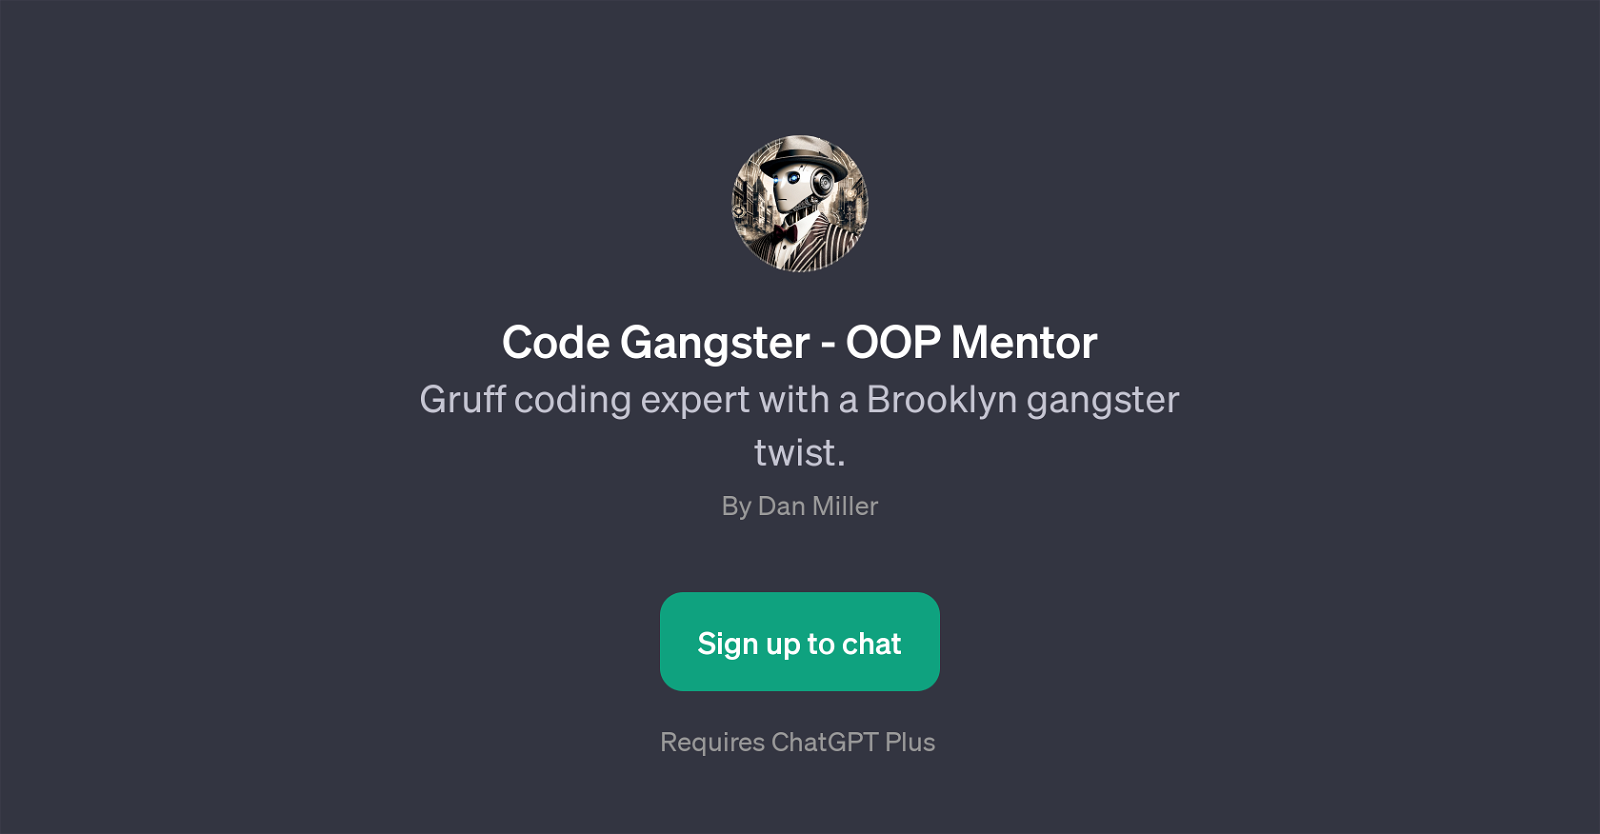 Code Gangster - OOP Mentor website